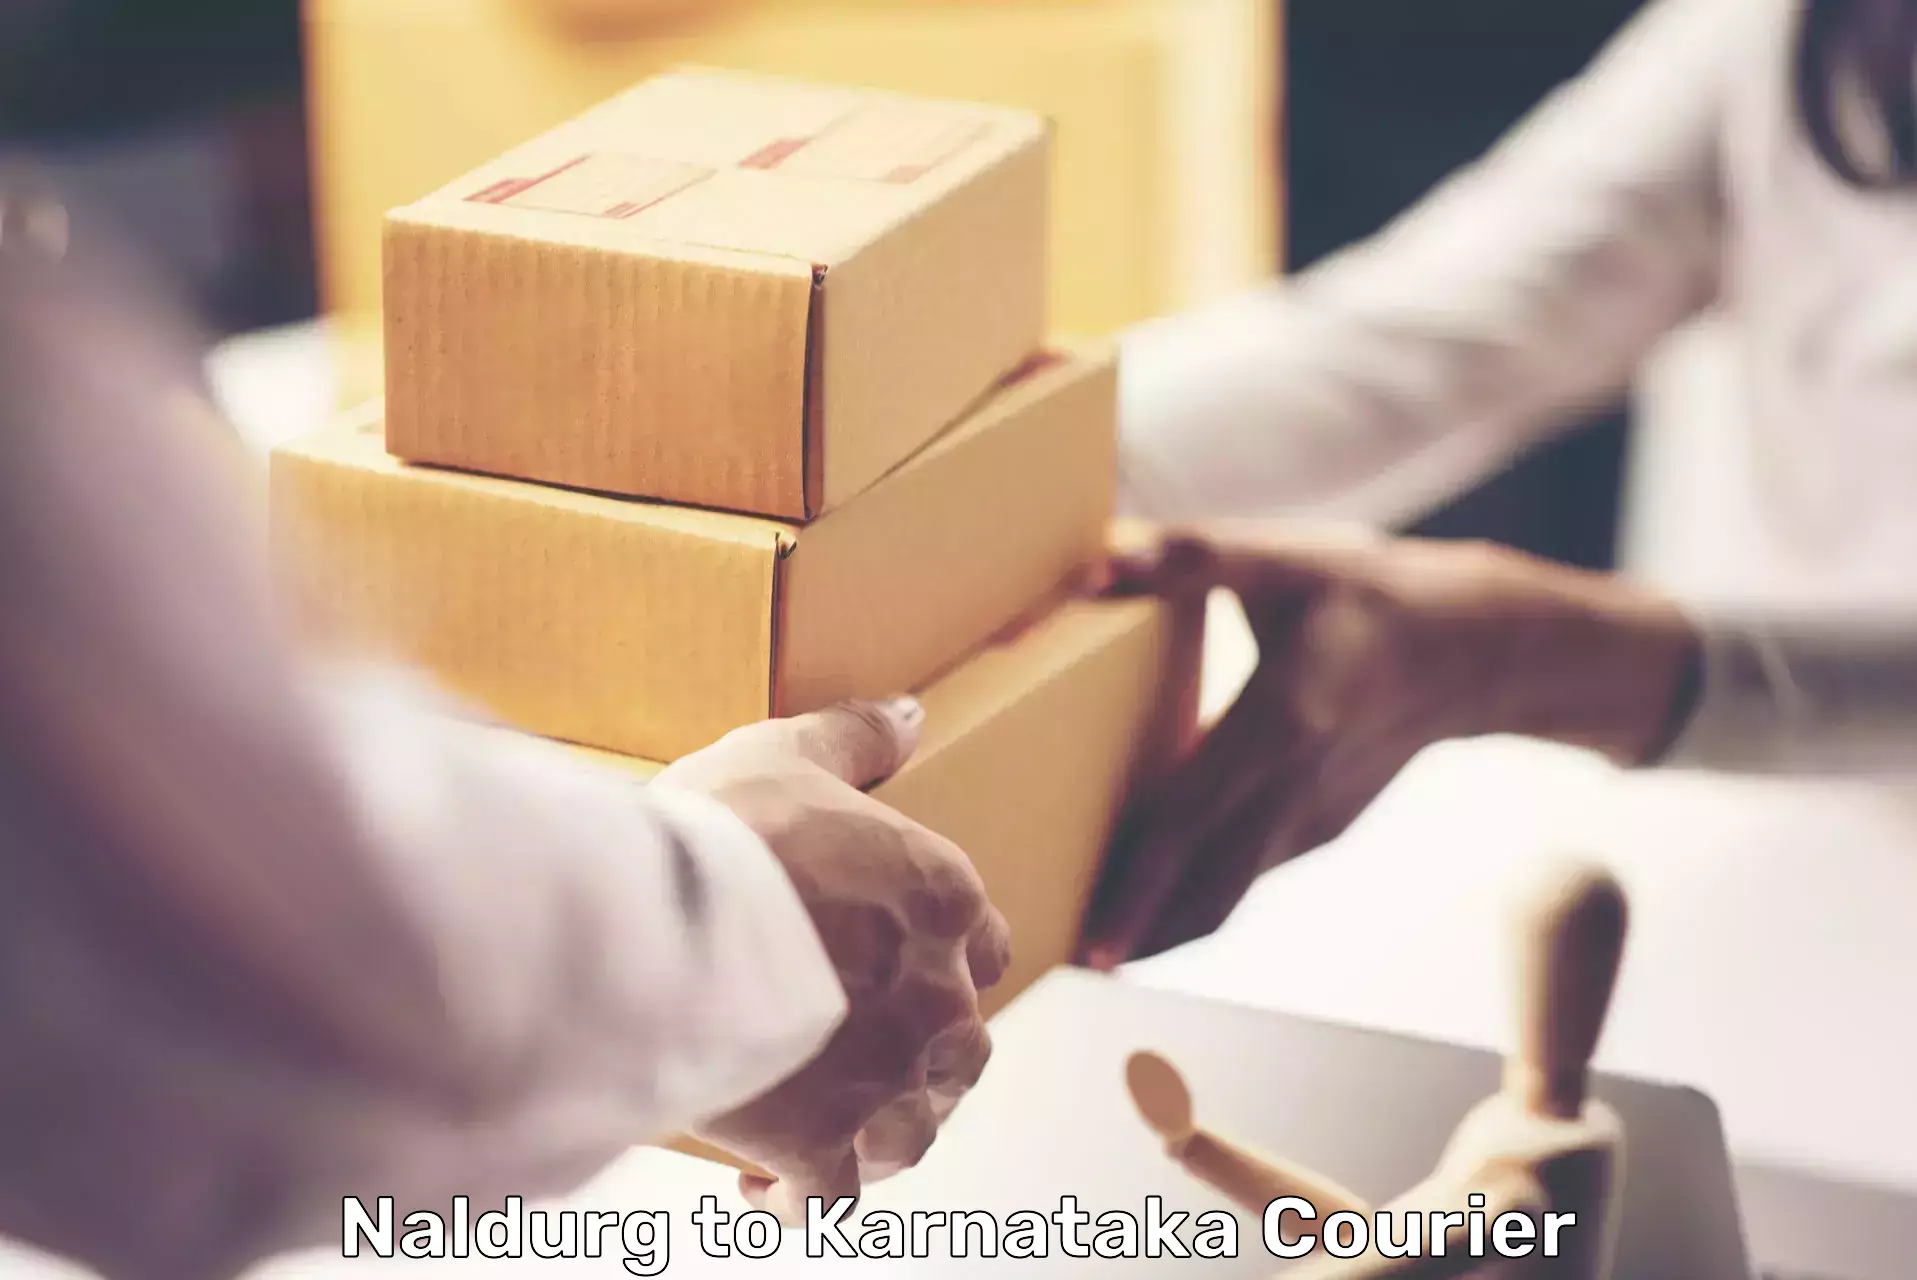 Reliable delivery network Naldurg to Sagara